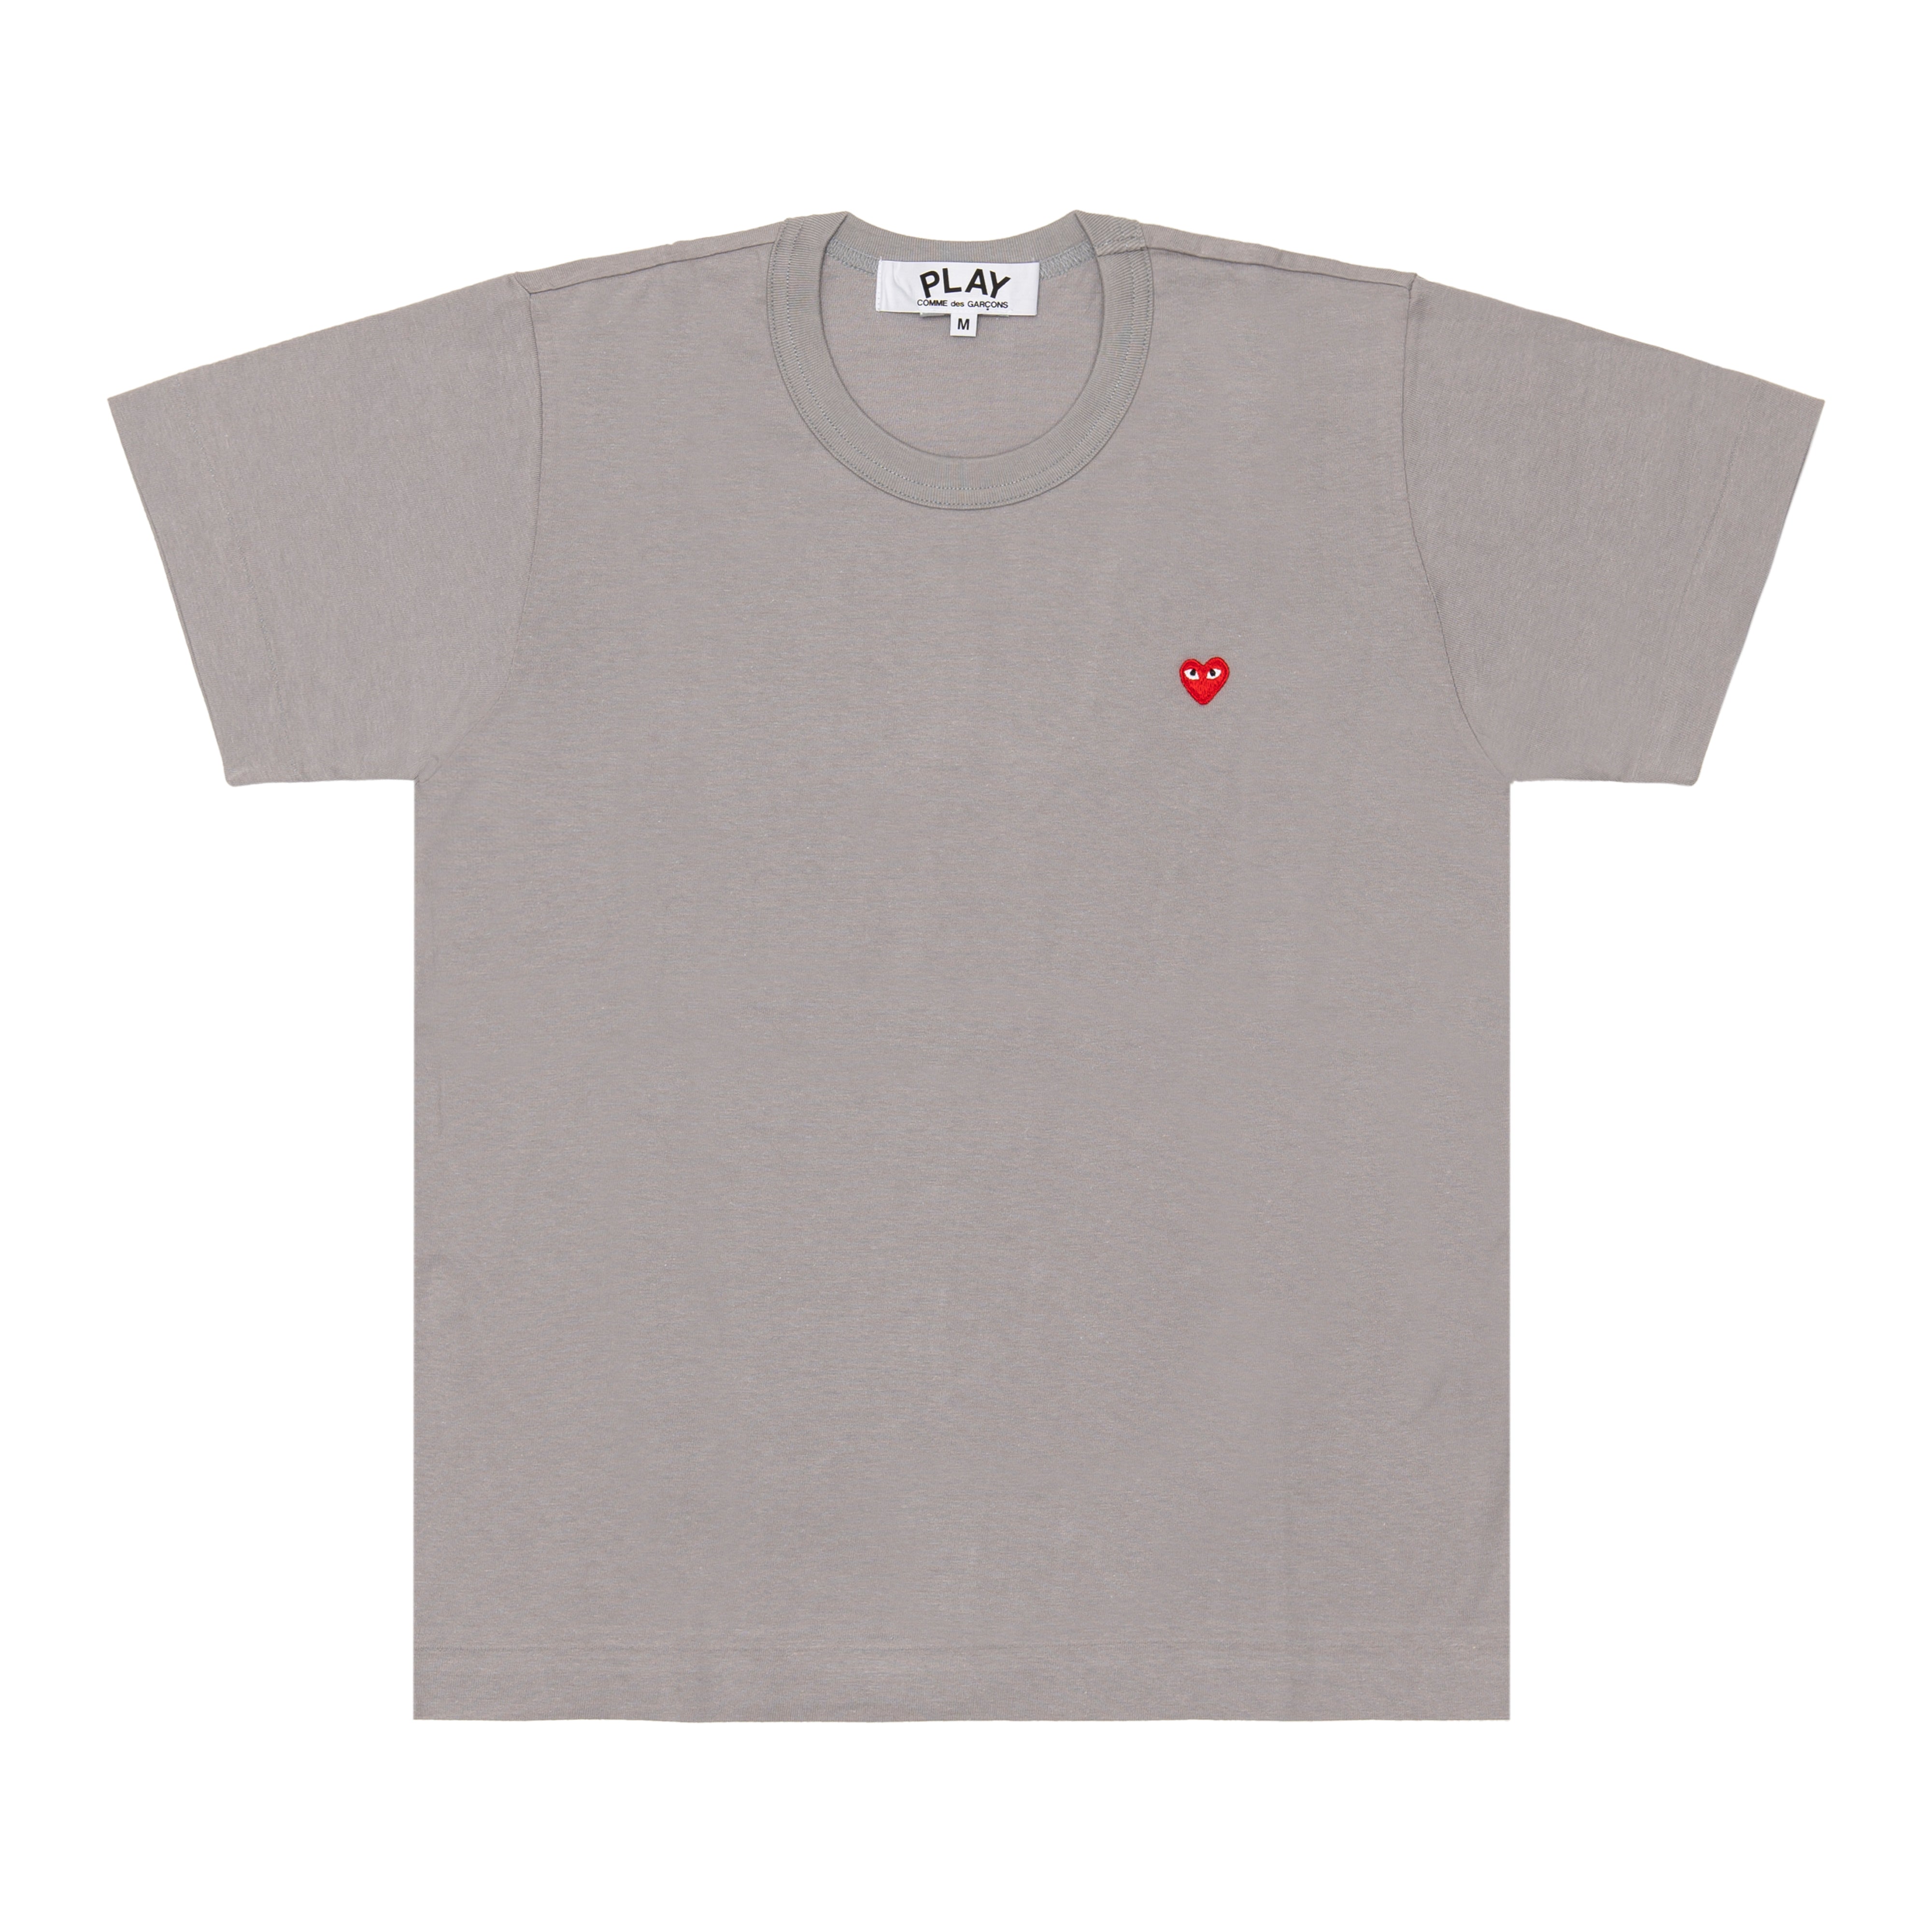 PLAY COMME des GARÇONS Small Red Heart S/S T-Shirt (Gray) Ladies: ¥6,600 Men's: ¥6,930